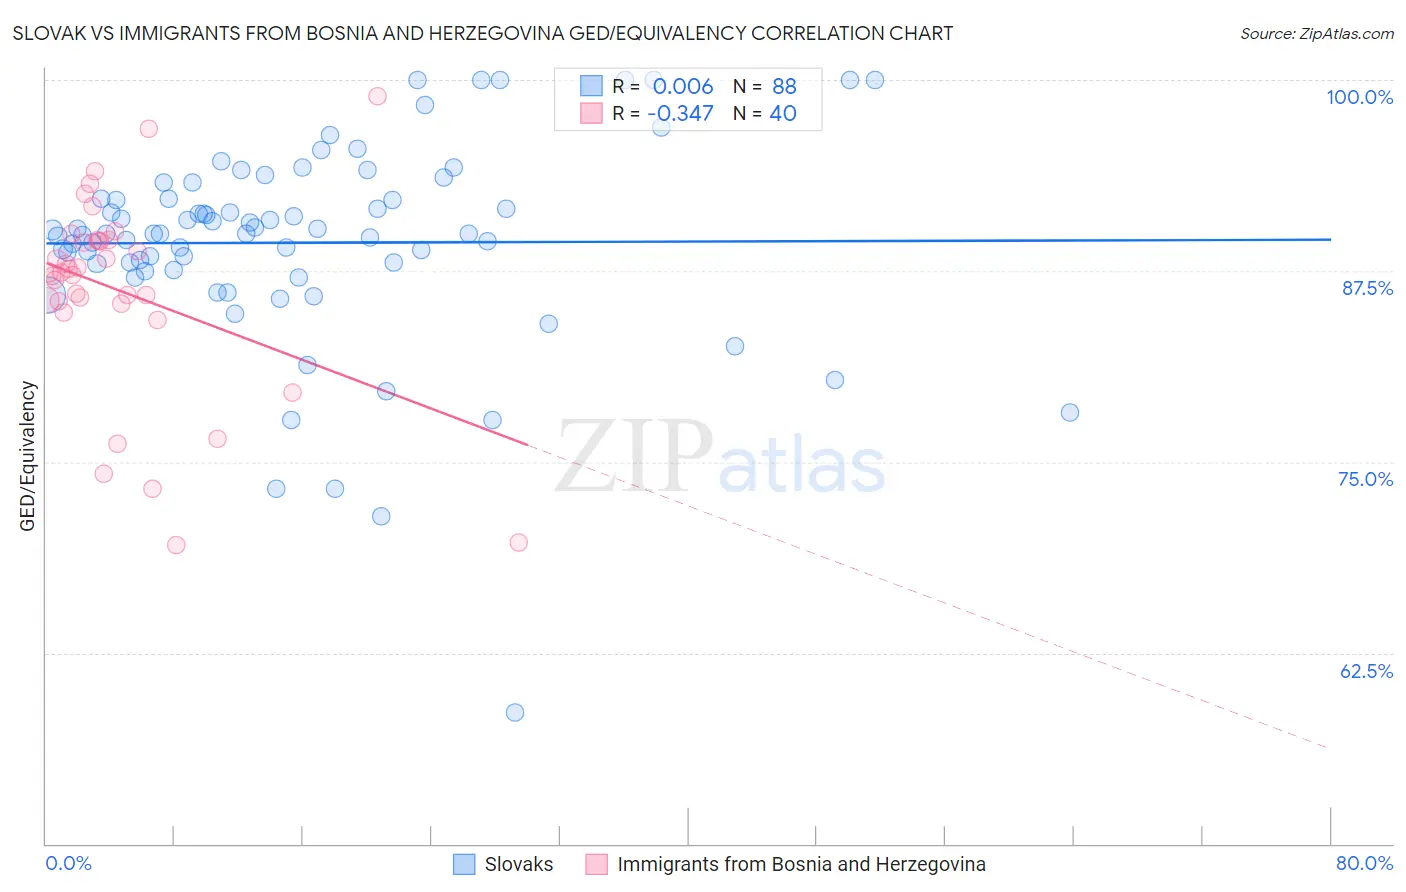 Slovak vs Immigrants from Bosnia and Herzegovina GED/Equivalency